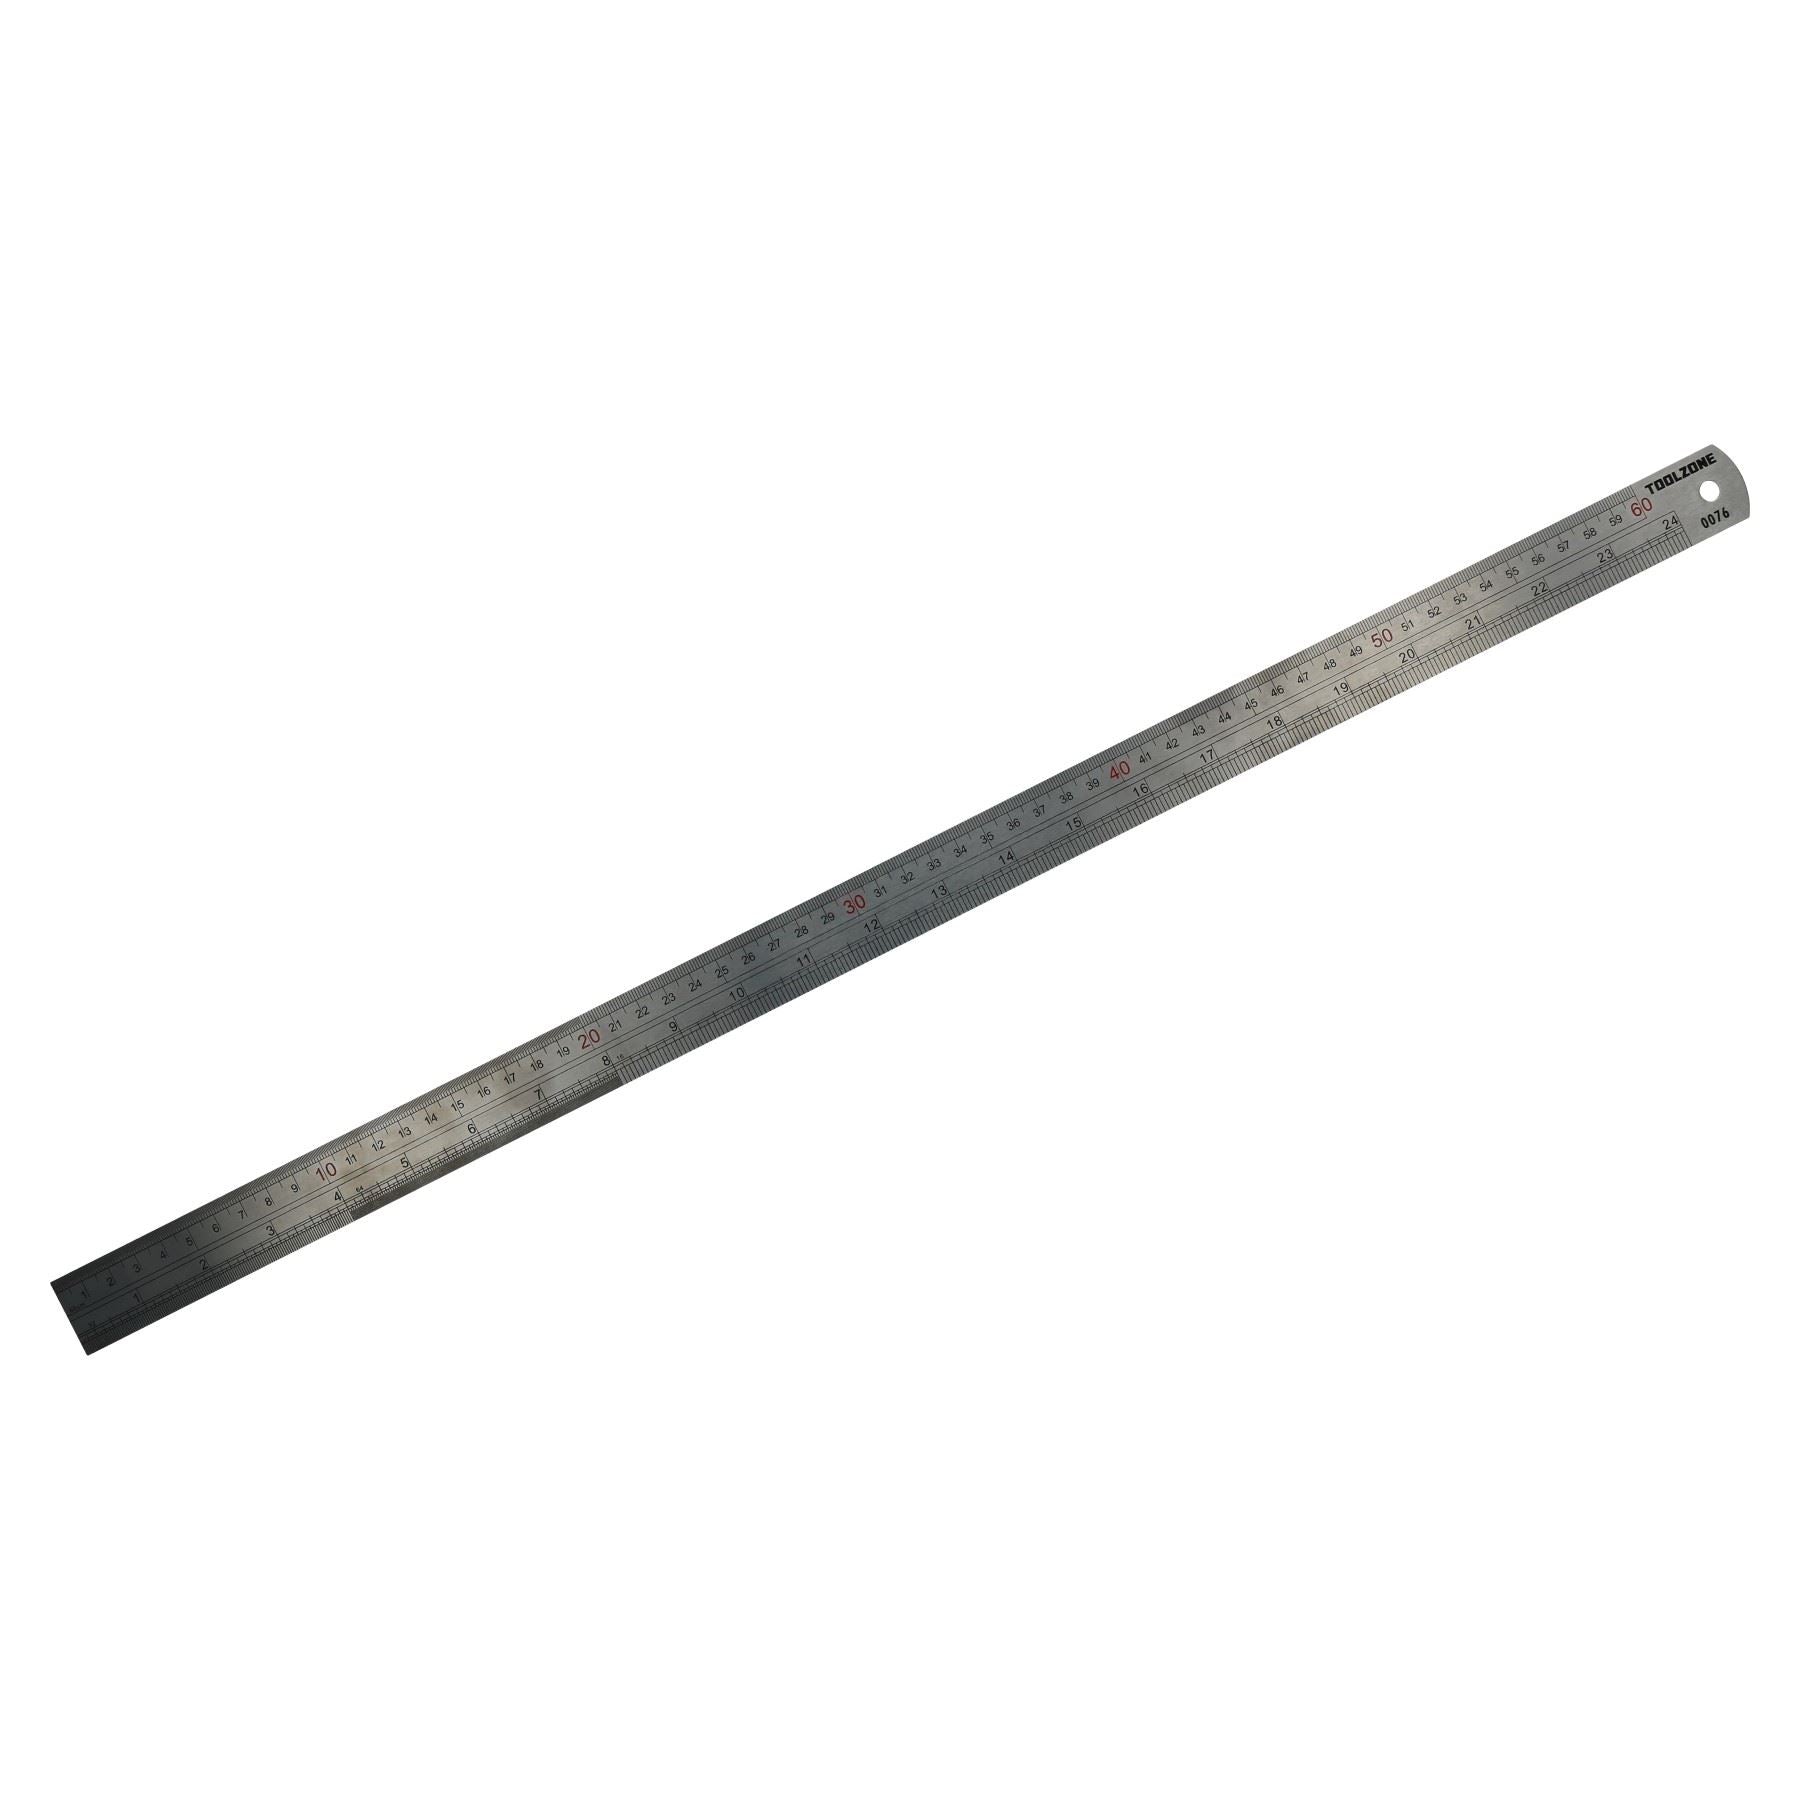 Stainless steel ruler 24" / 610mm / straight edge / rule / measuring TE509